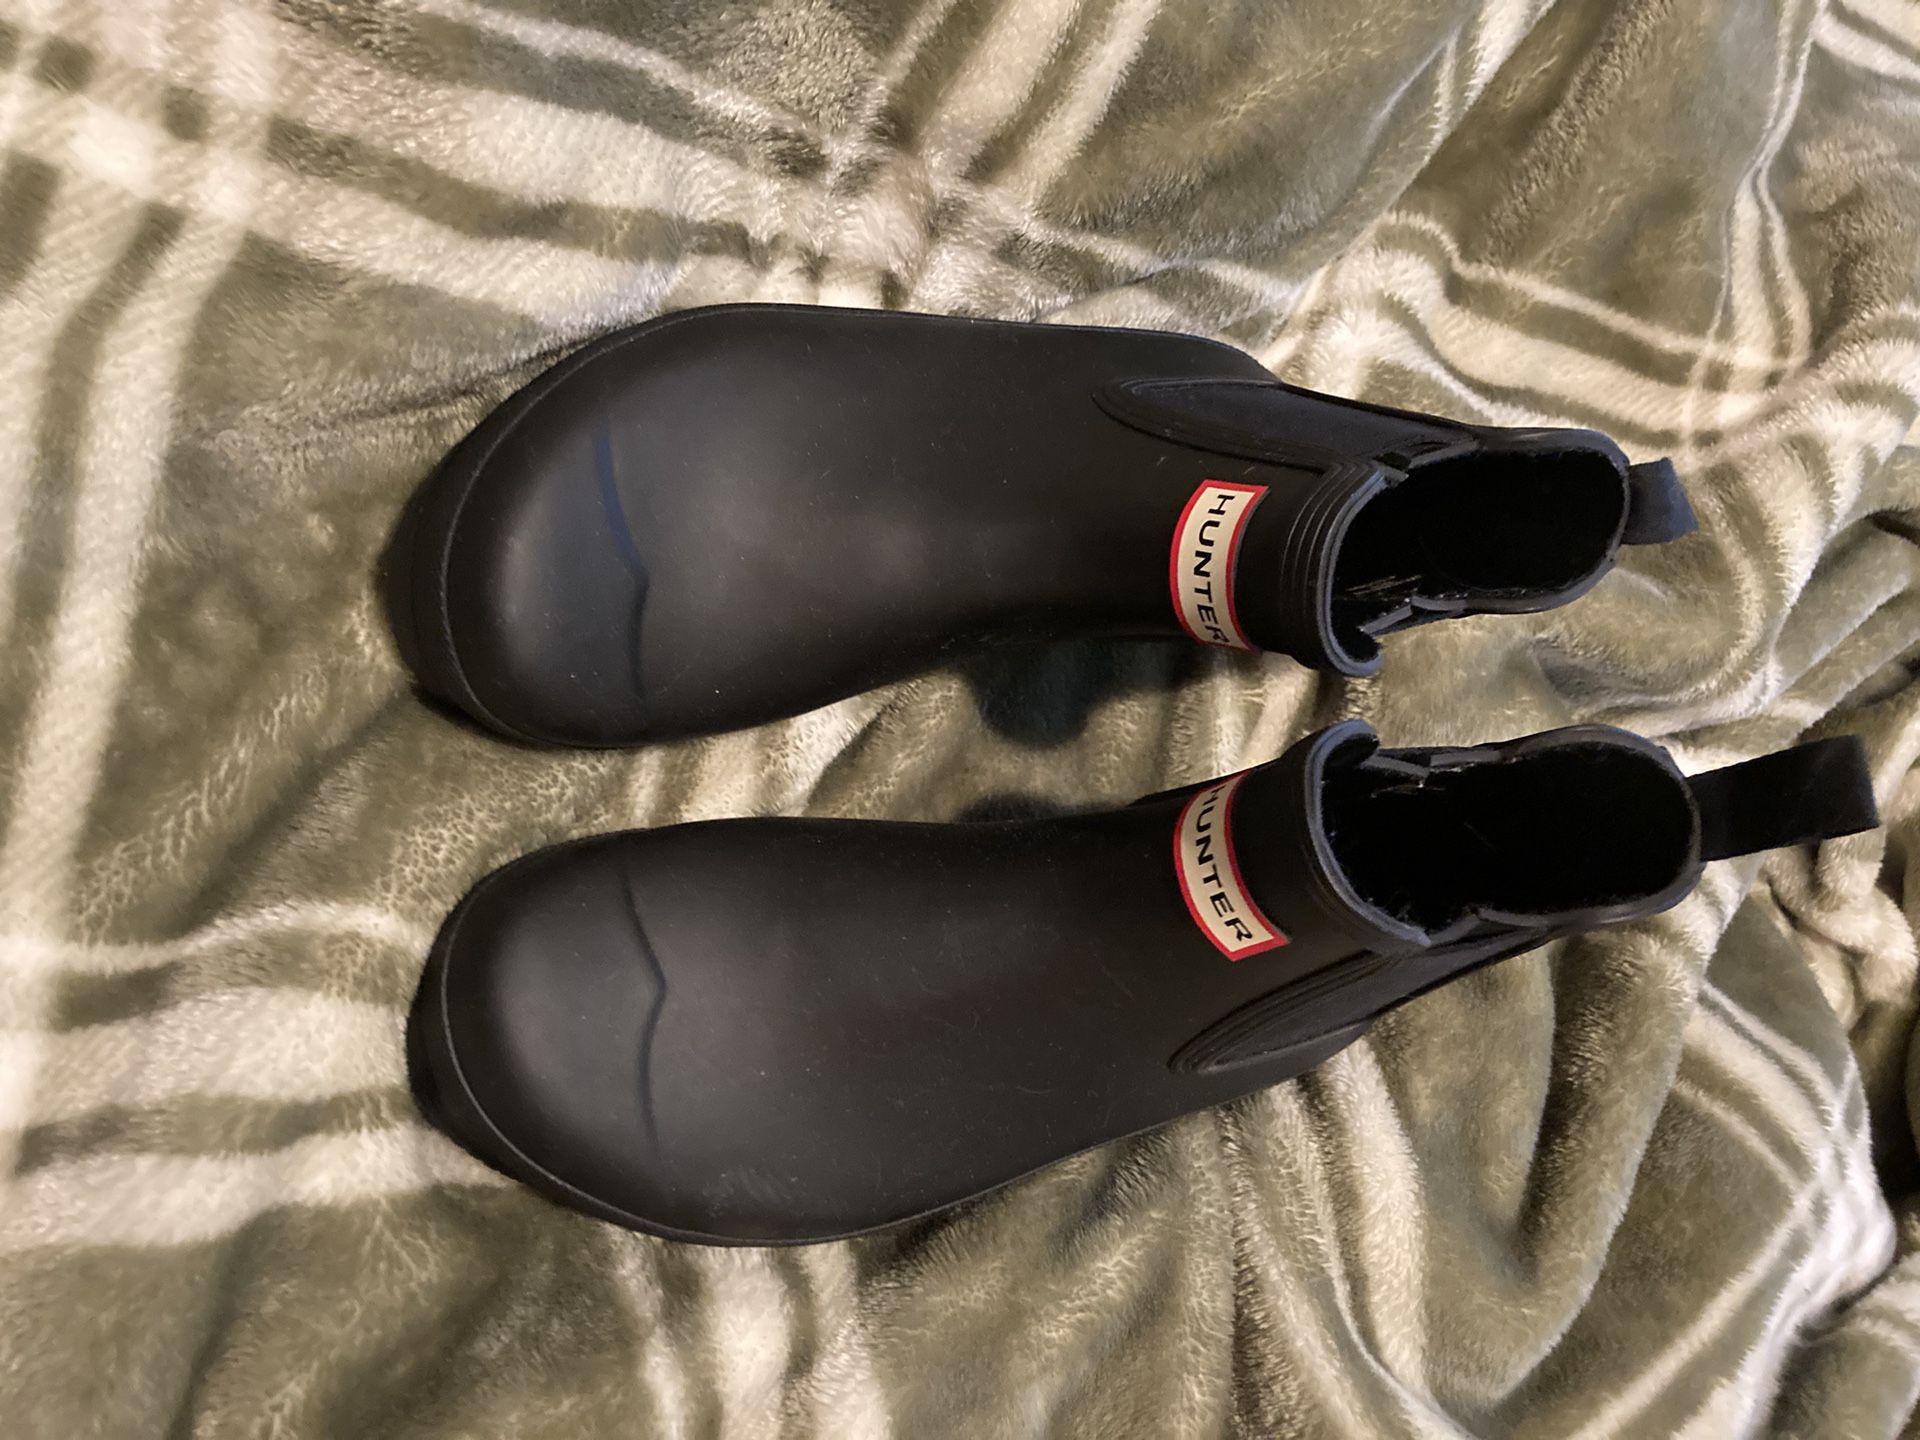 Hunter Chelsea Rain Boots Size 9